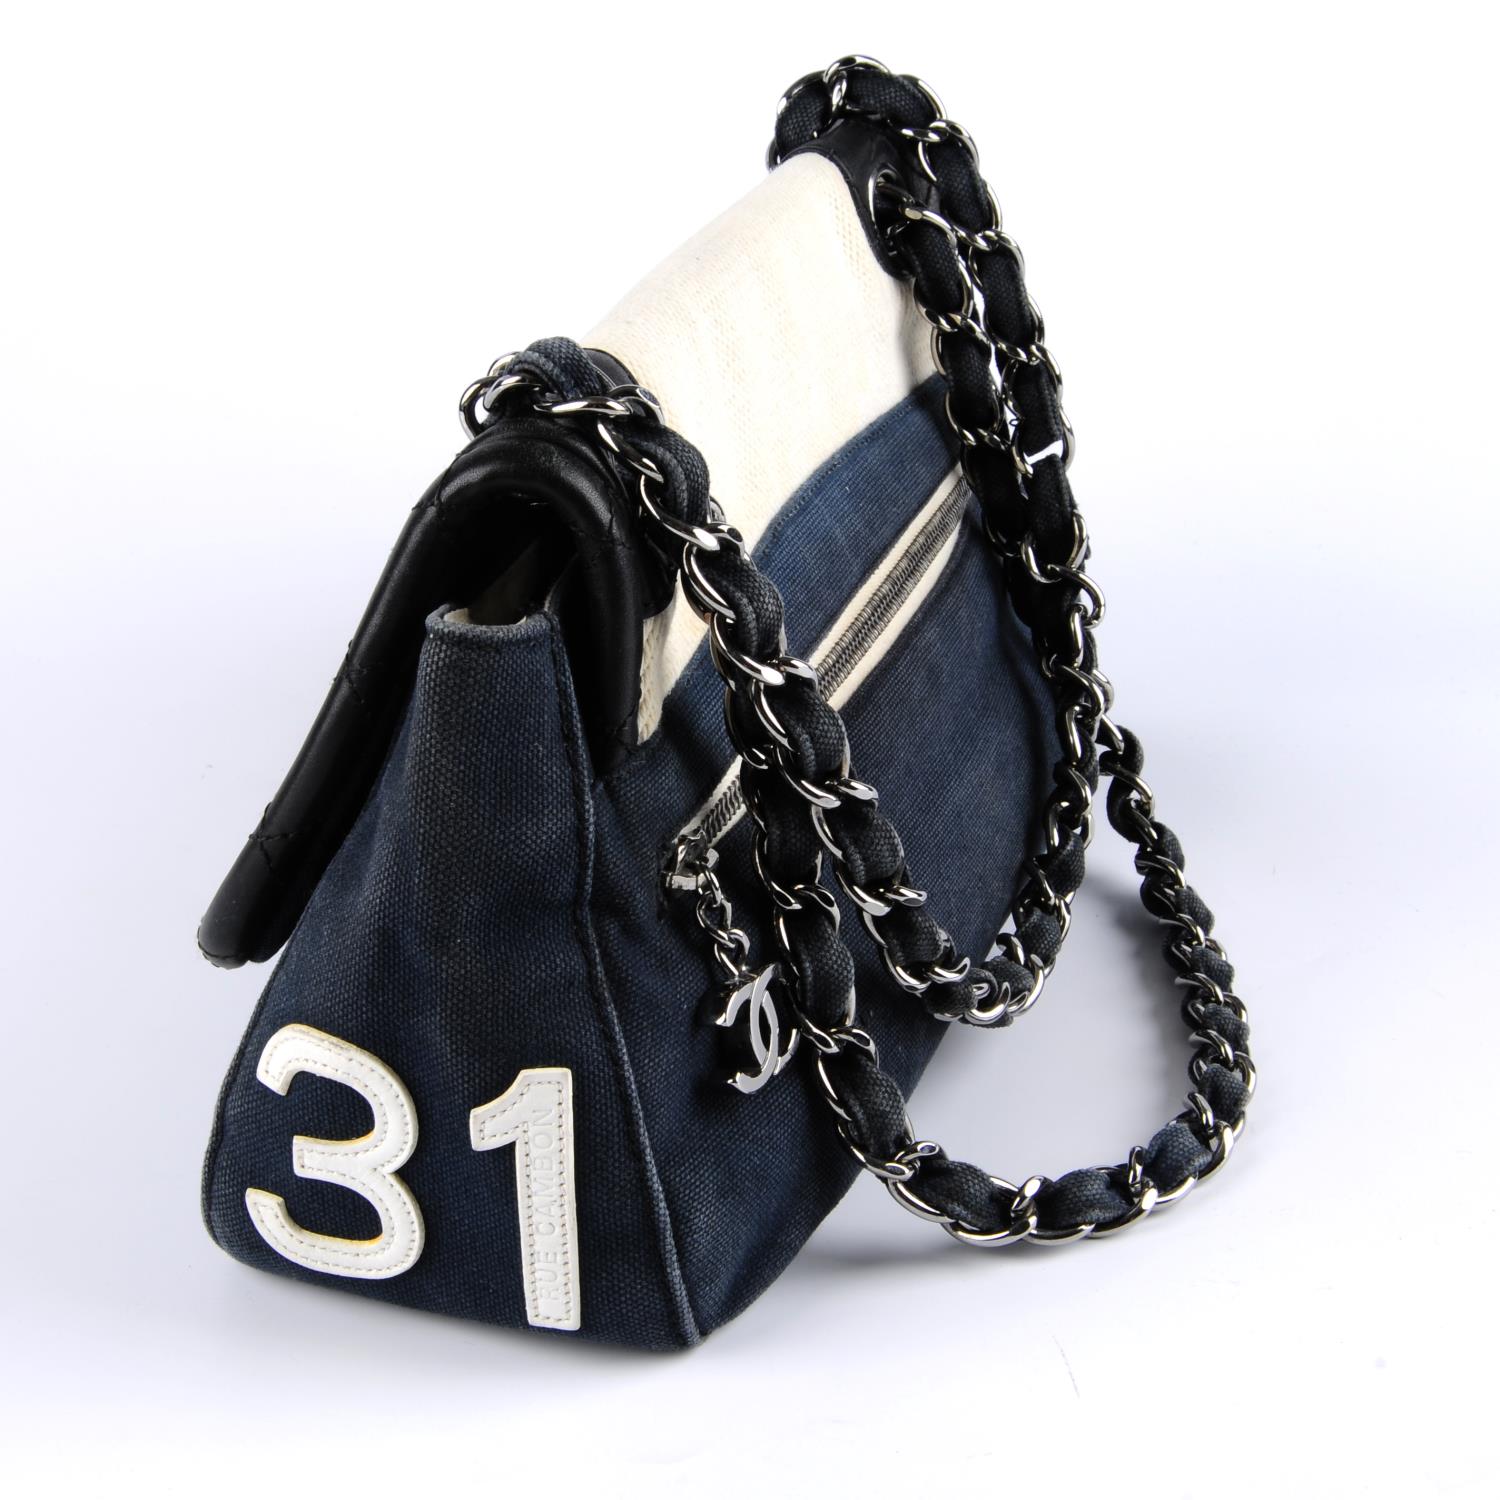 CHANEL - a No.5 Giant Mademoiselle Lock handbag. - Image 3 of 5